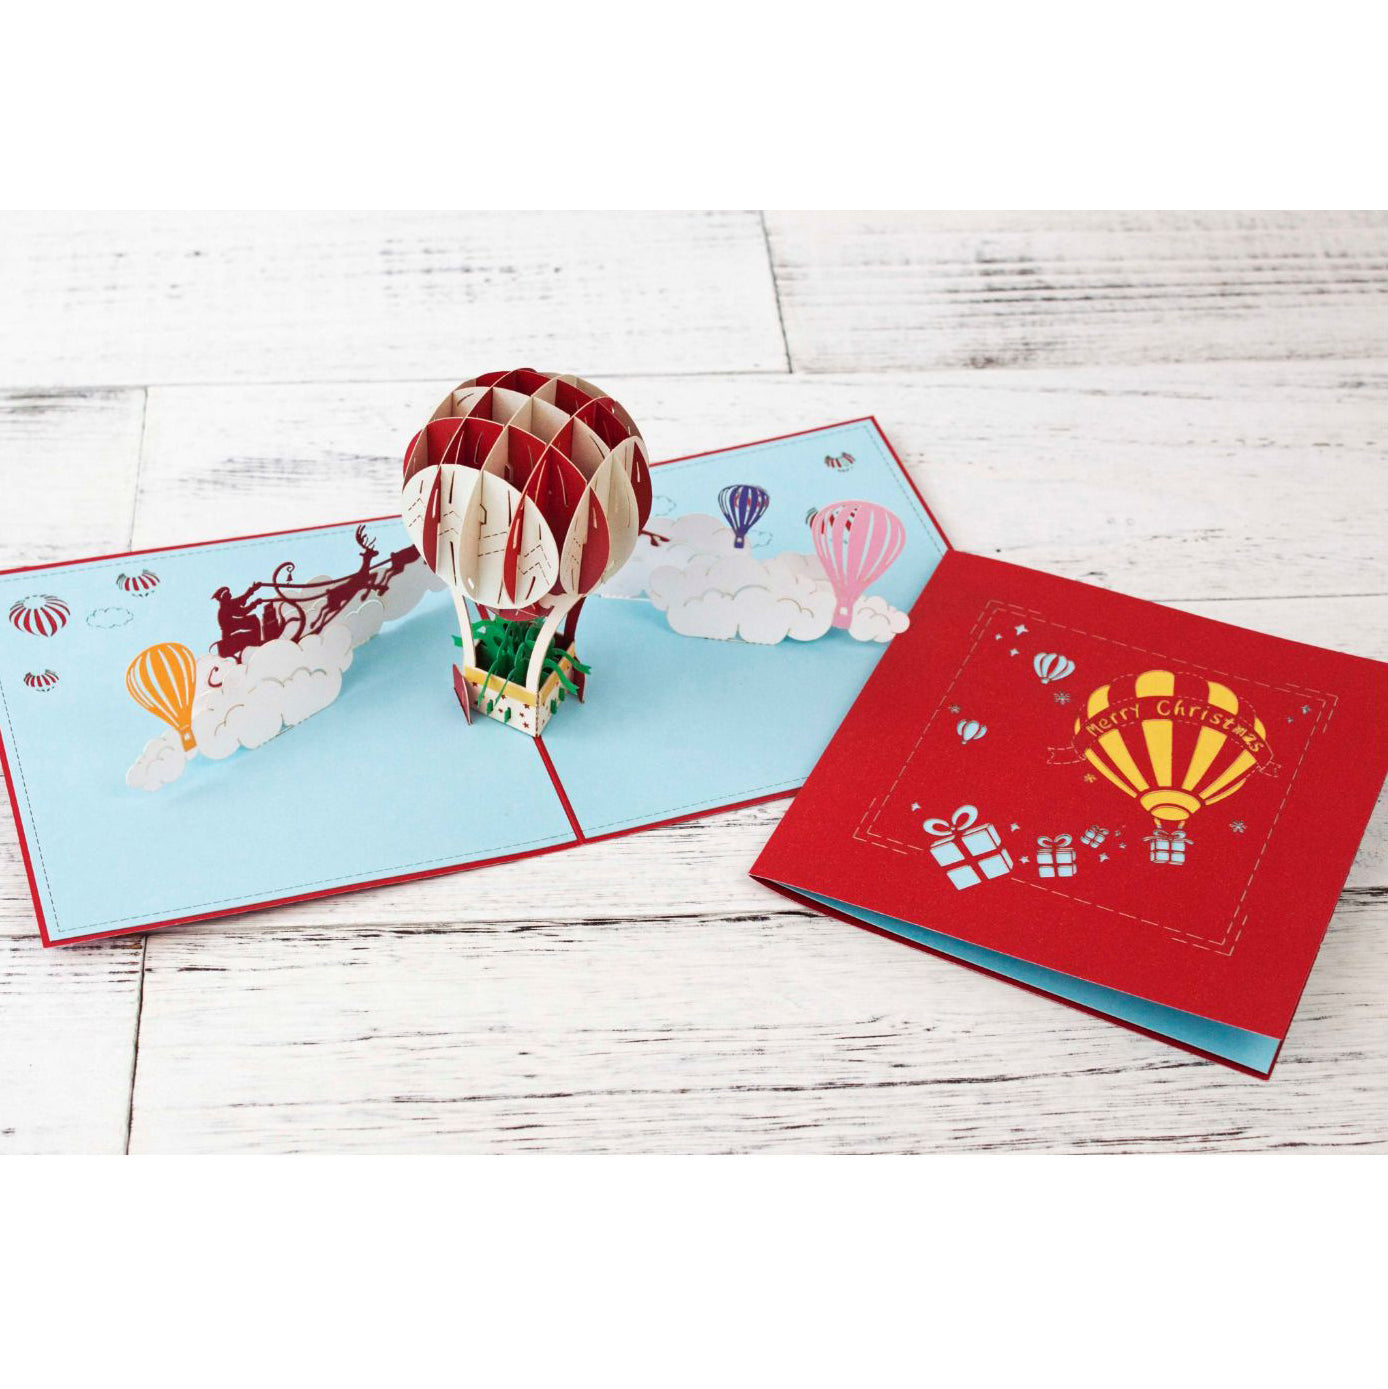 Hot Air Balloon Pop-up Greeting Card